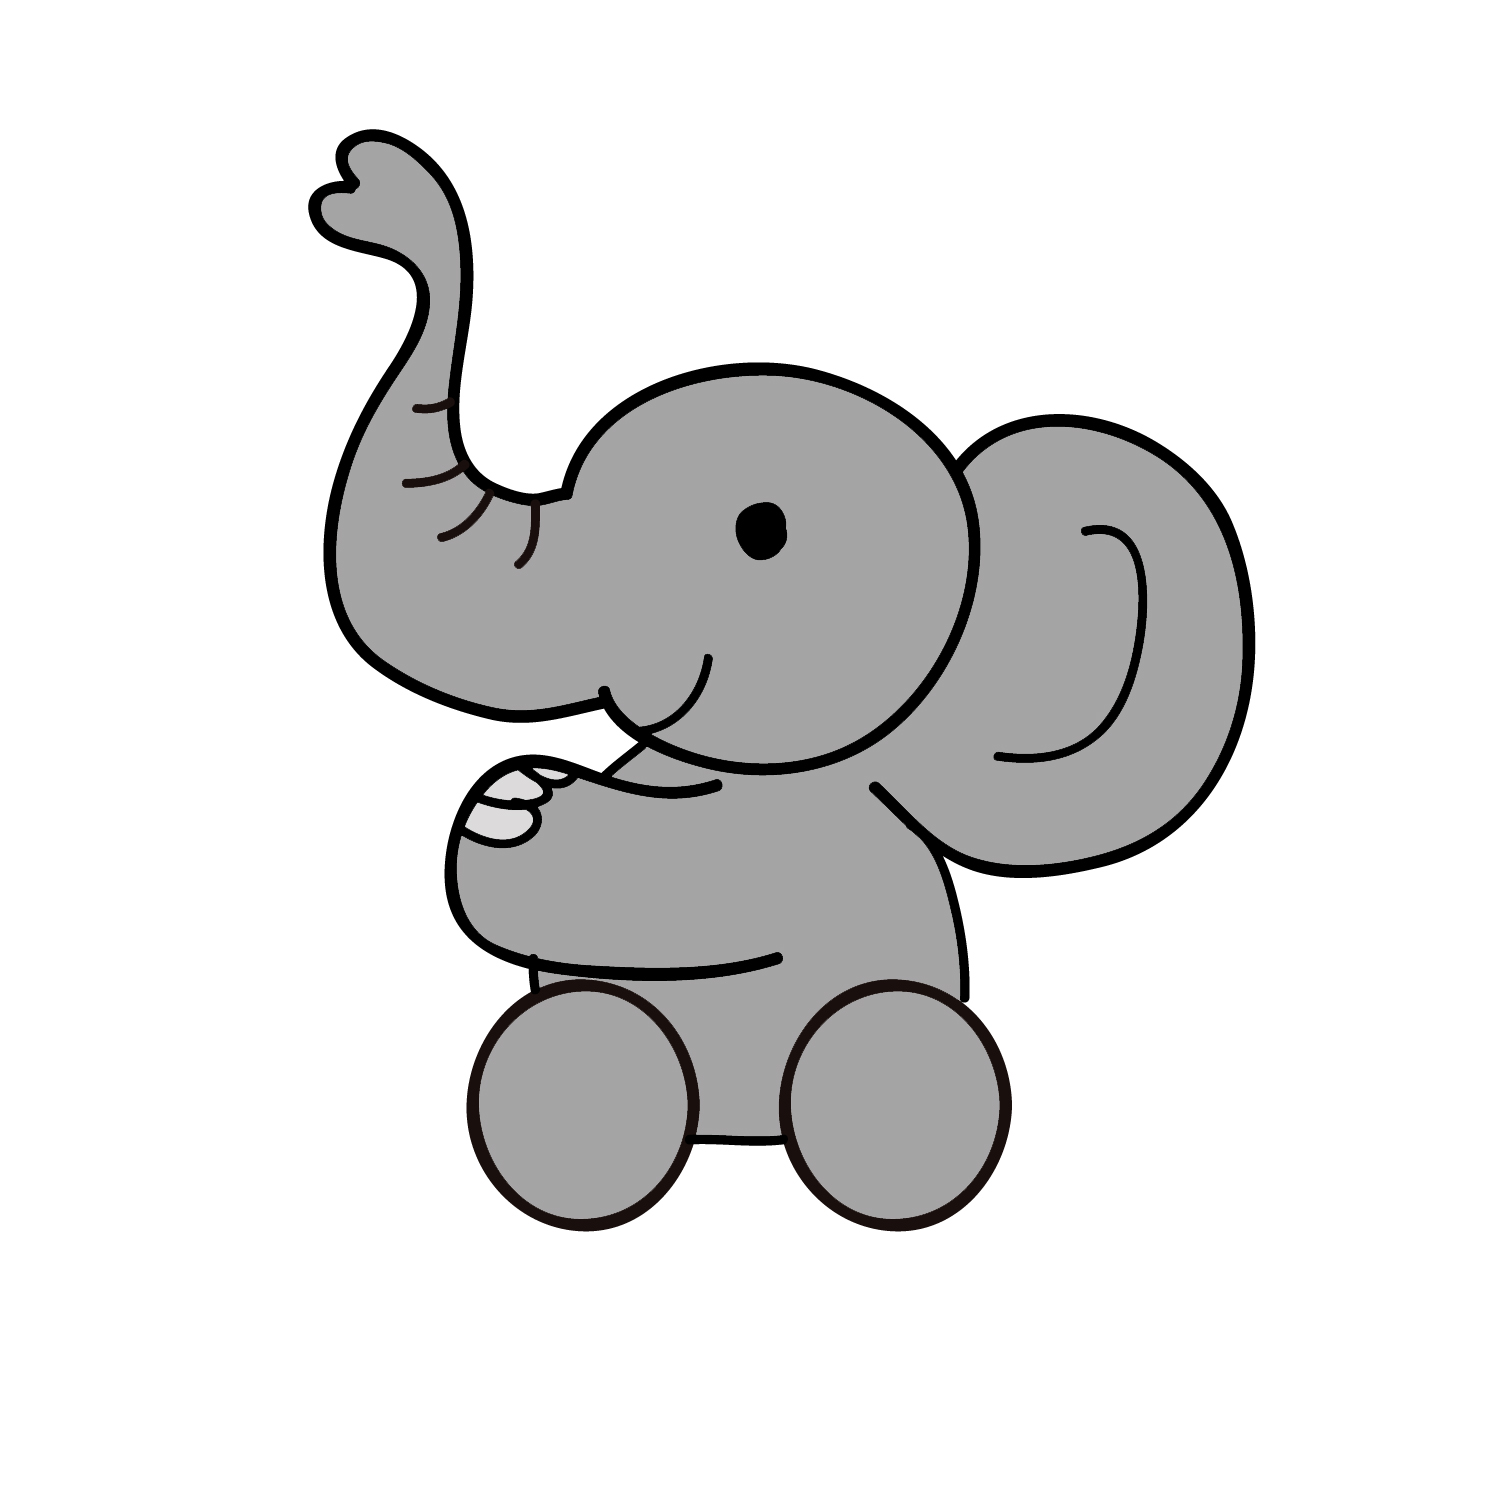 Cartoon Images Of Elephants - ClipArt Best